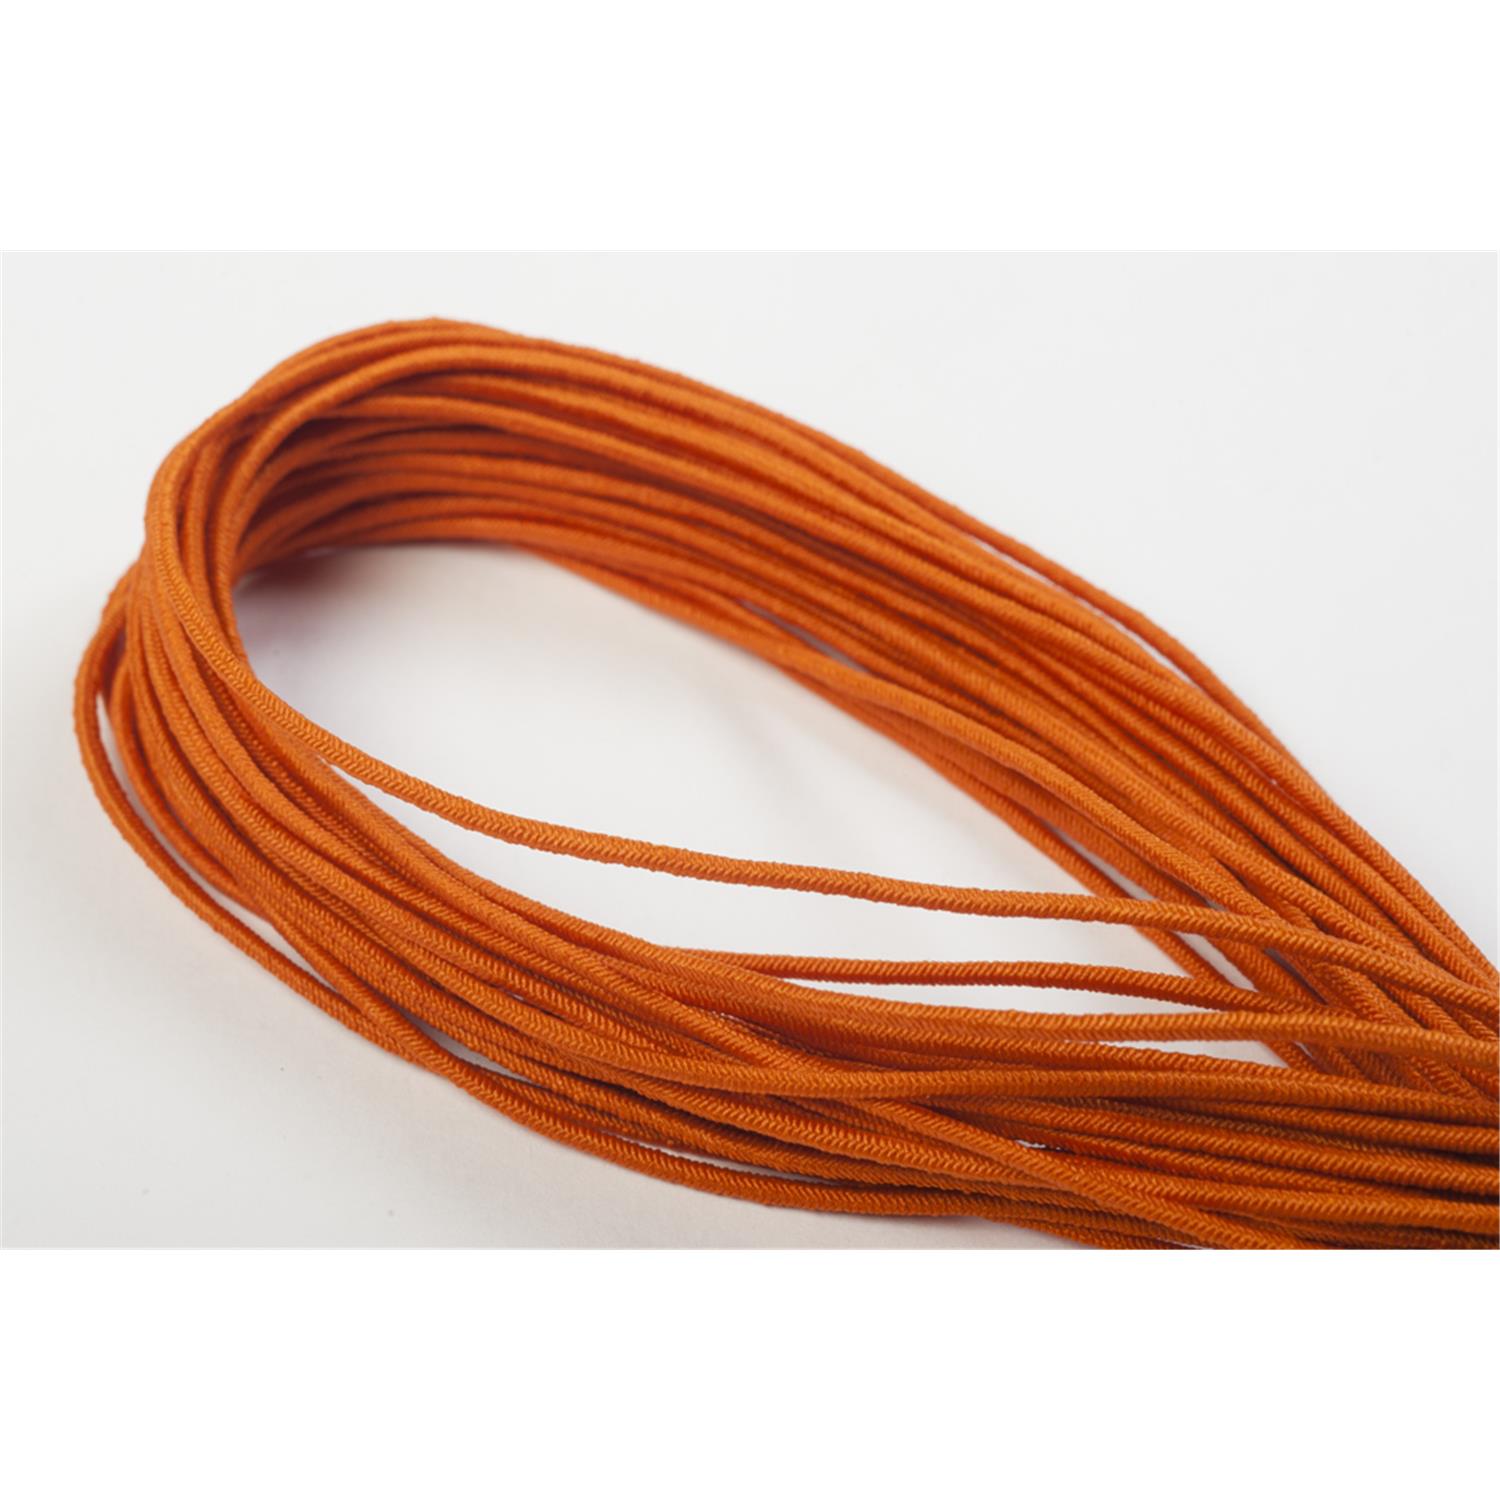 Elastische Kordeln / Hutgummi 2,5 mm dick in 19 Farben 05 / orange 10 m